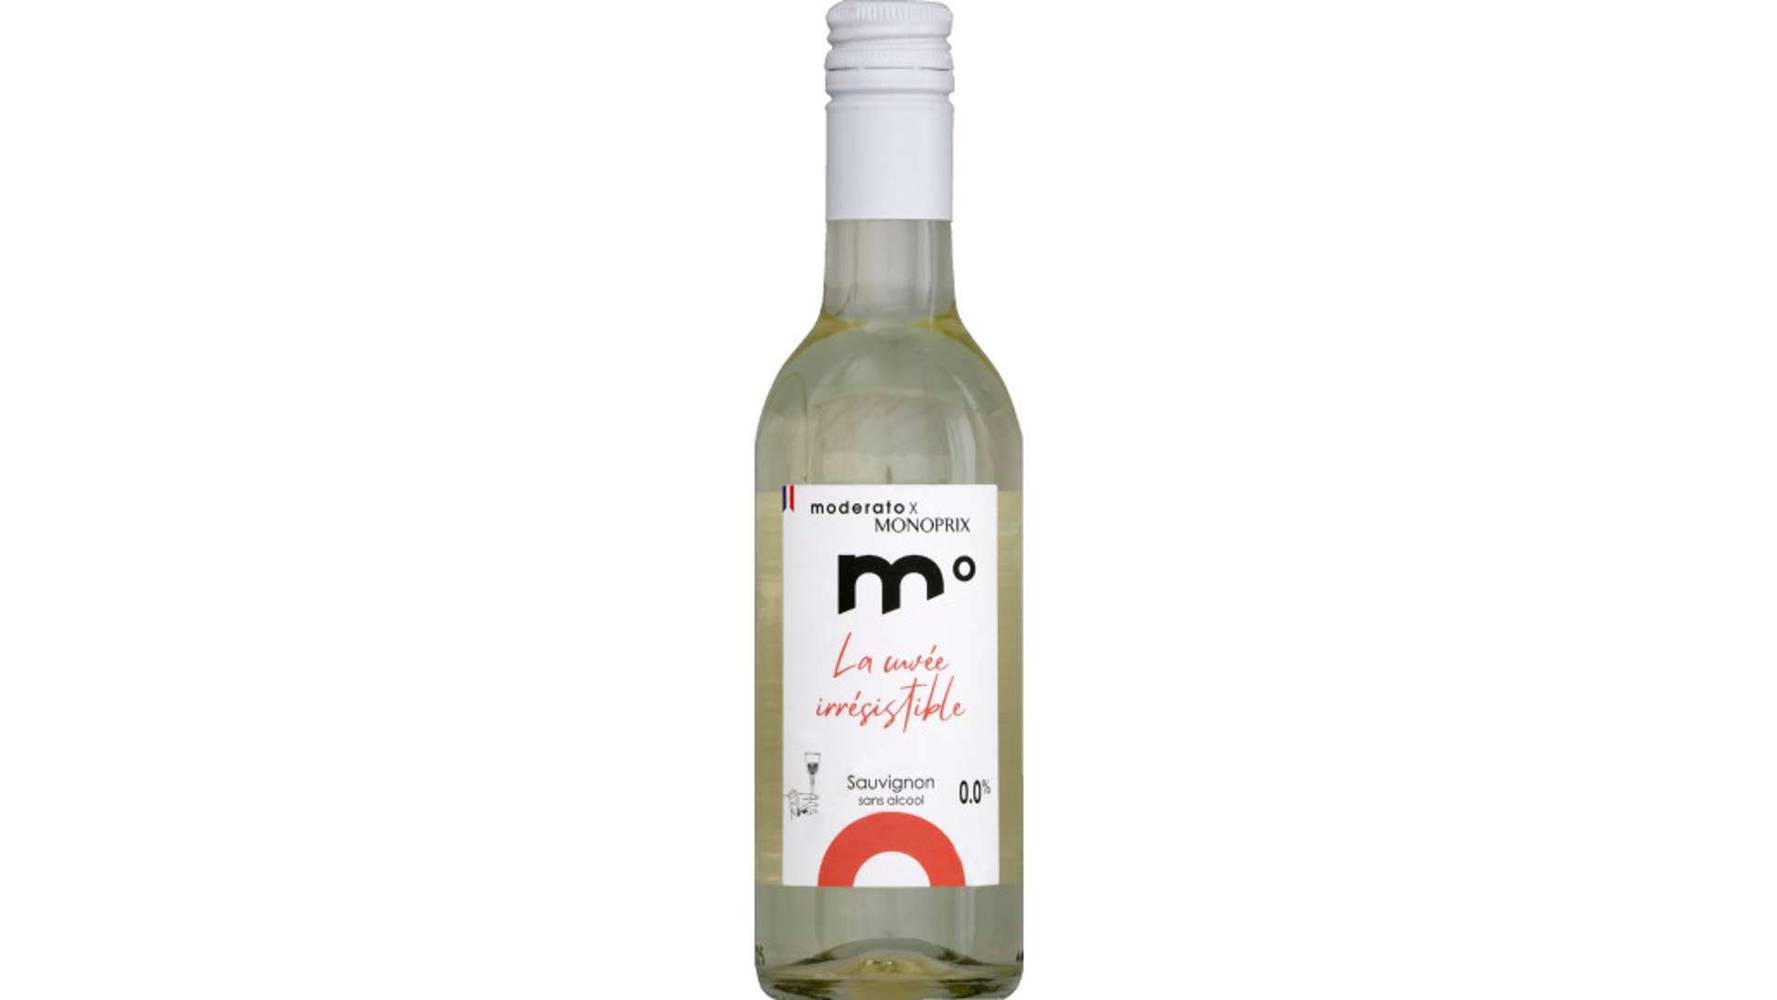 Monderato X Monoprix - Vin blanc sans alcool (250 ml) (sauvignon)